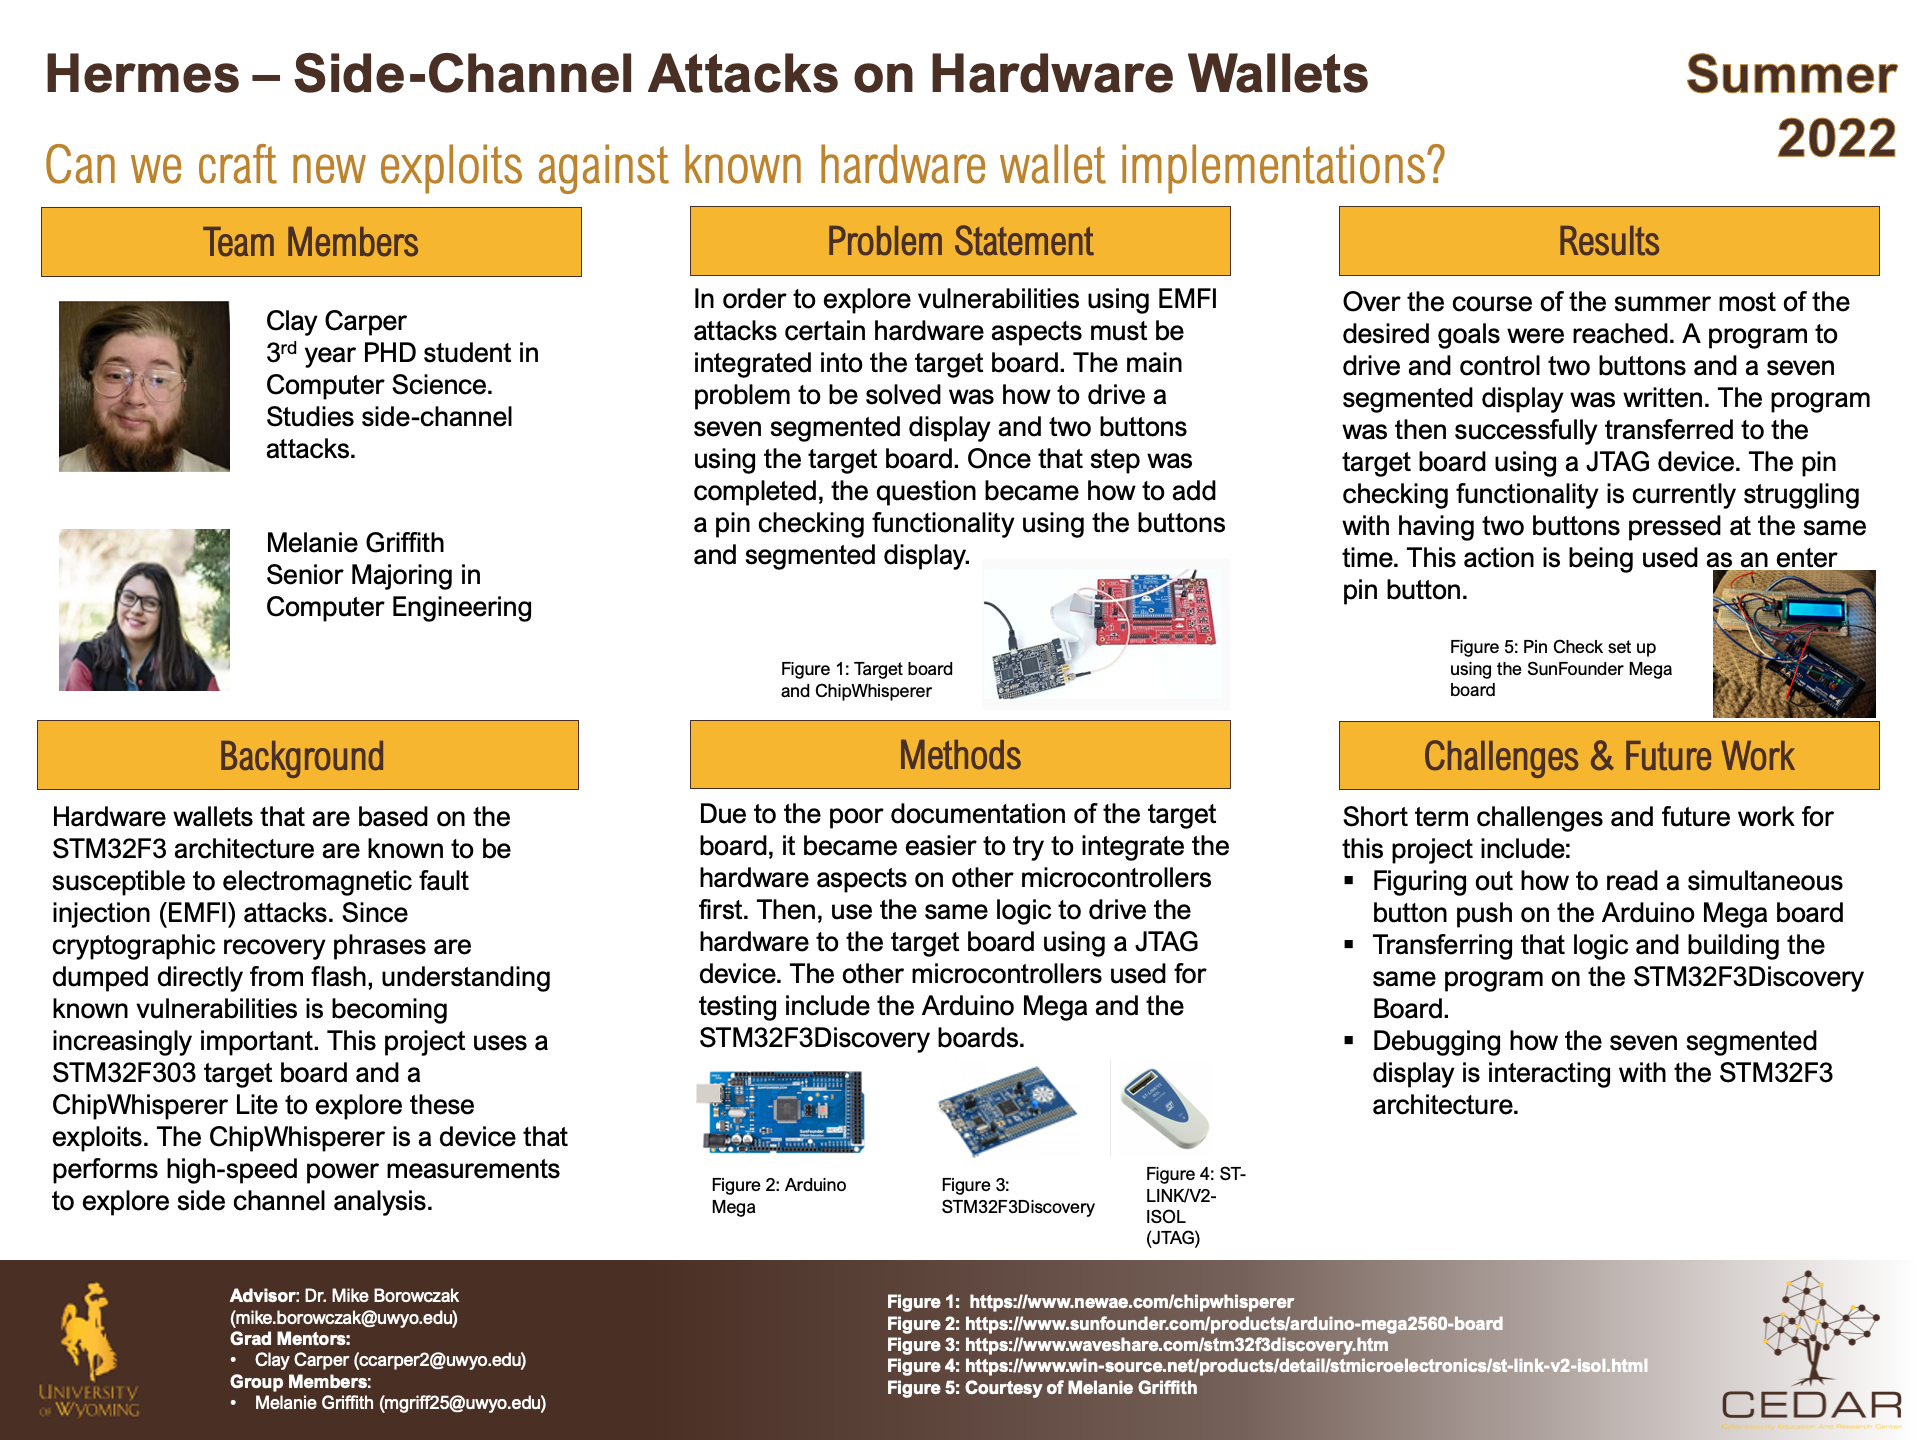  Poster for Hermes - Side-Channel Attacks on Hardware Wallets